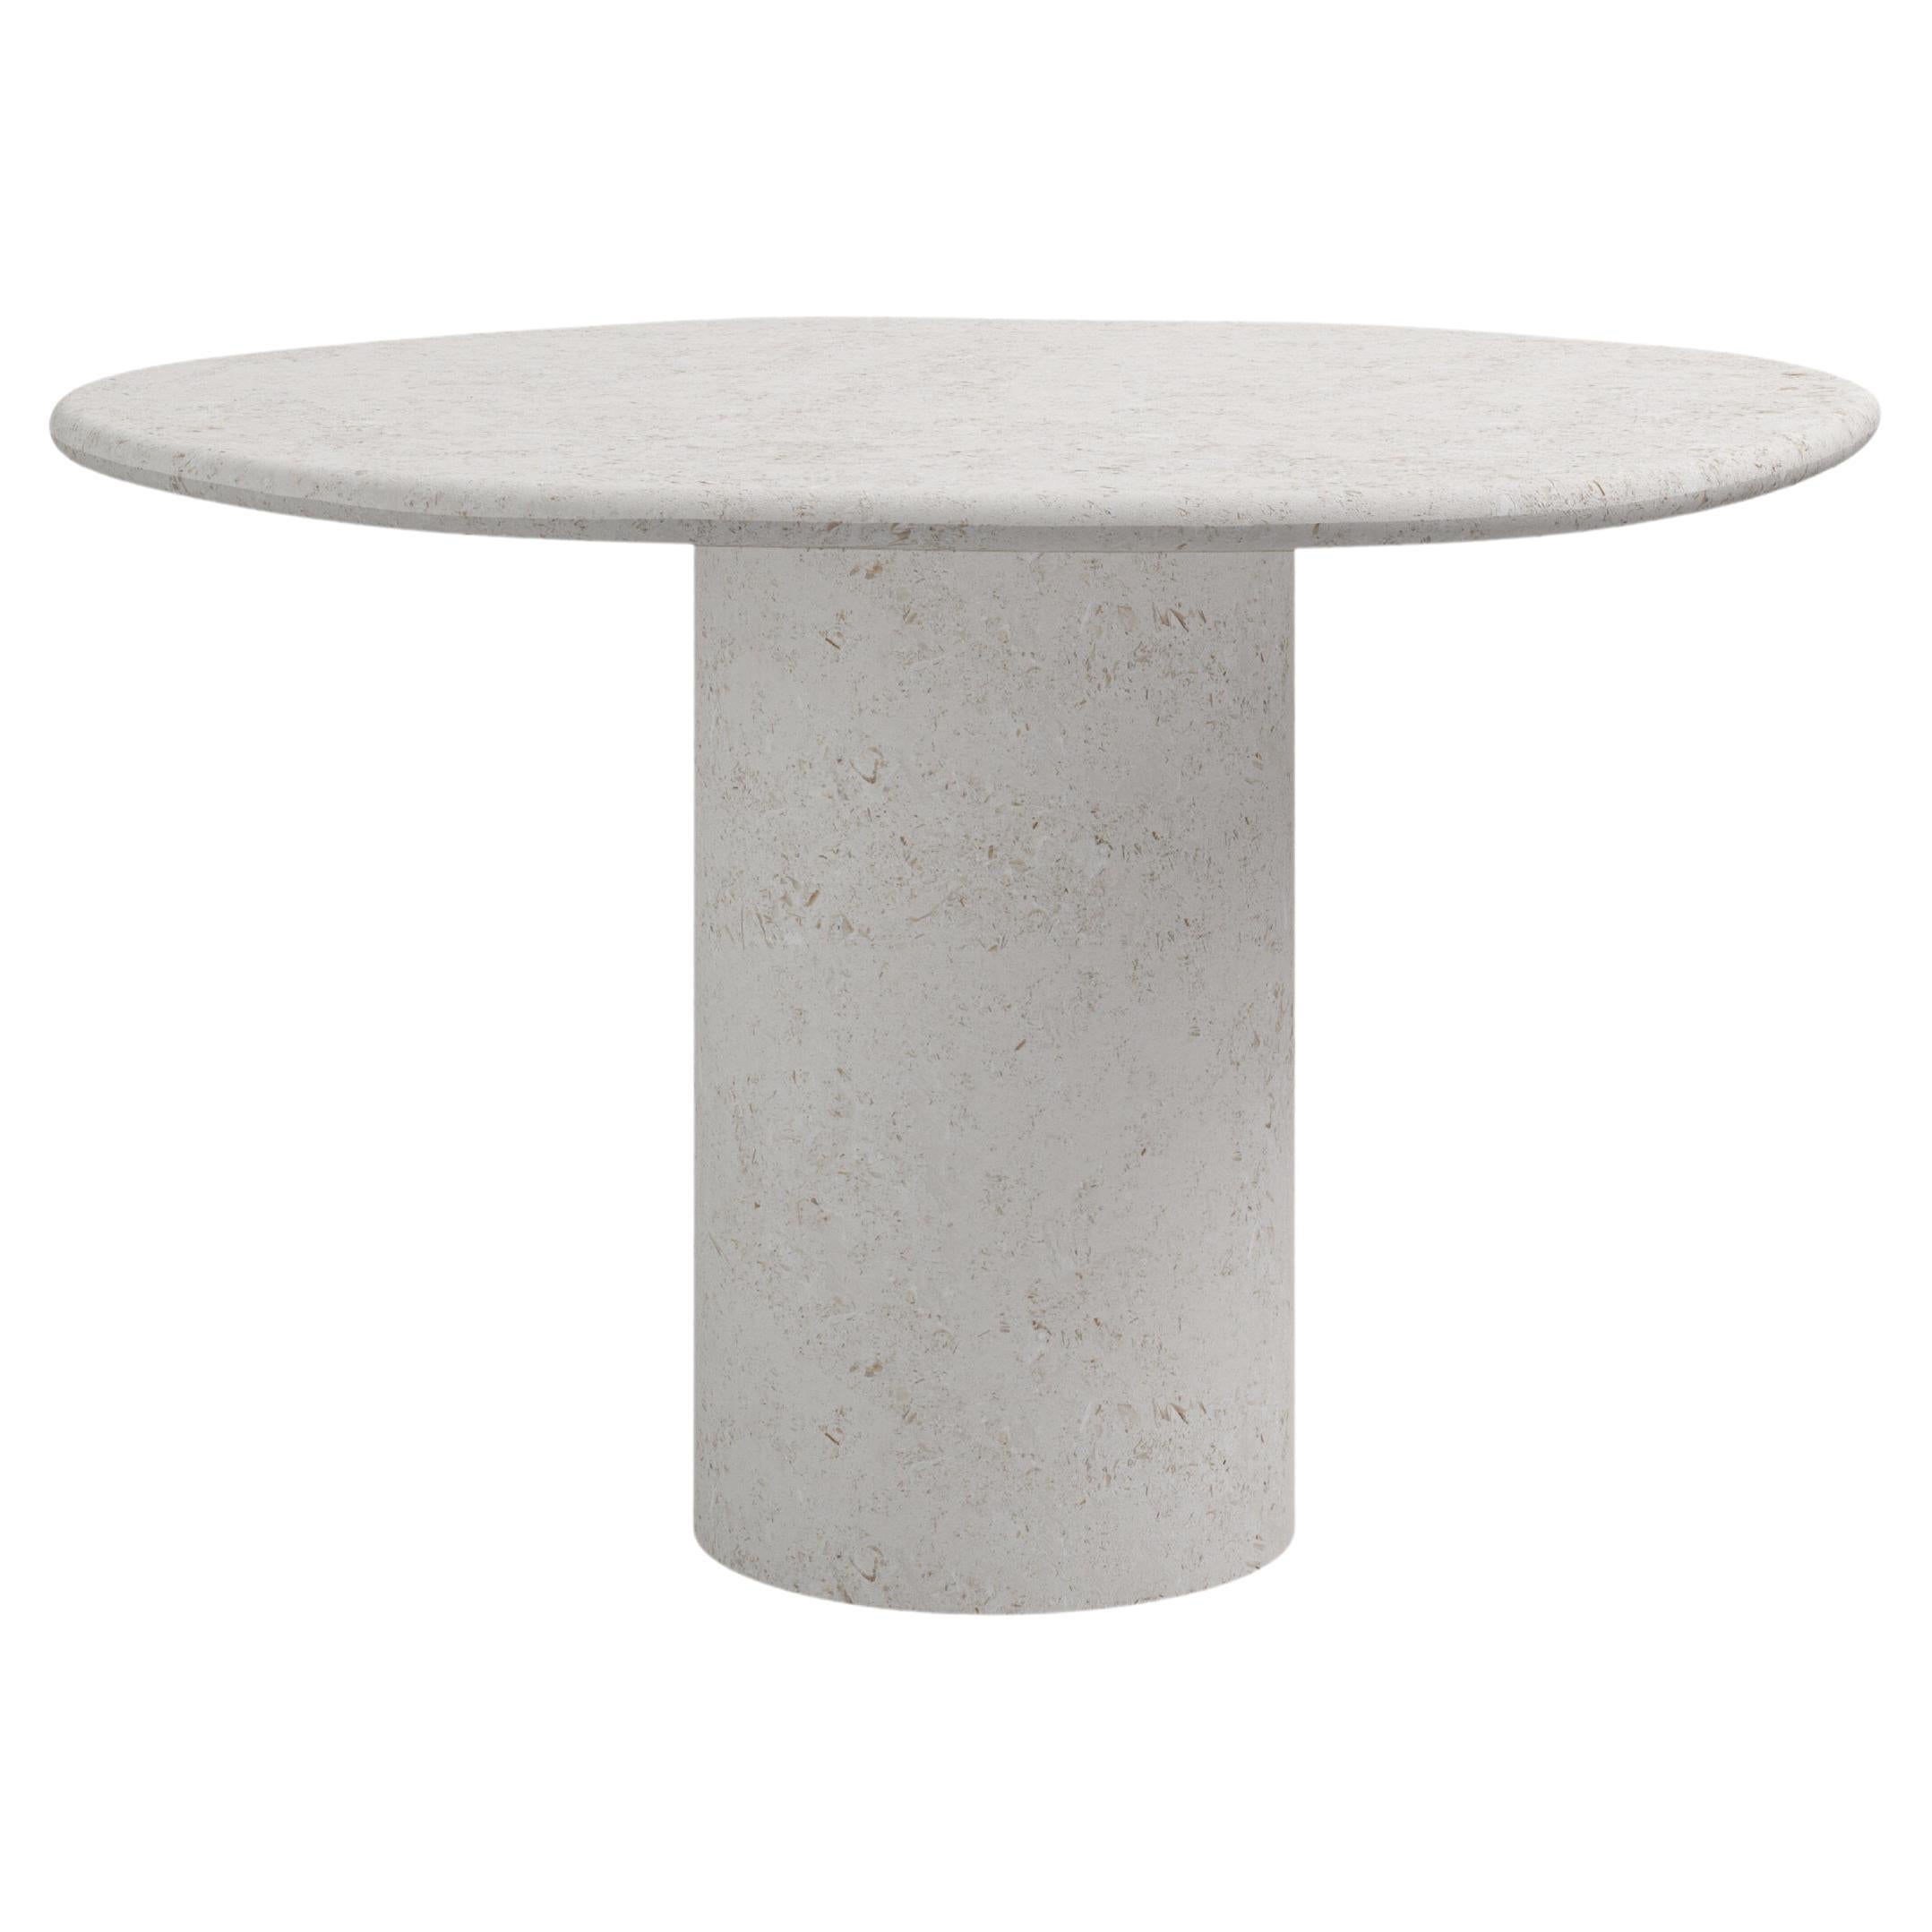 FORM(LA) Lago Round Dining Table 42”L x 42”W x 30”H Limestone Oceano For Sale